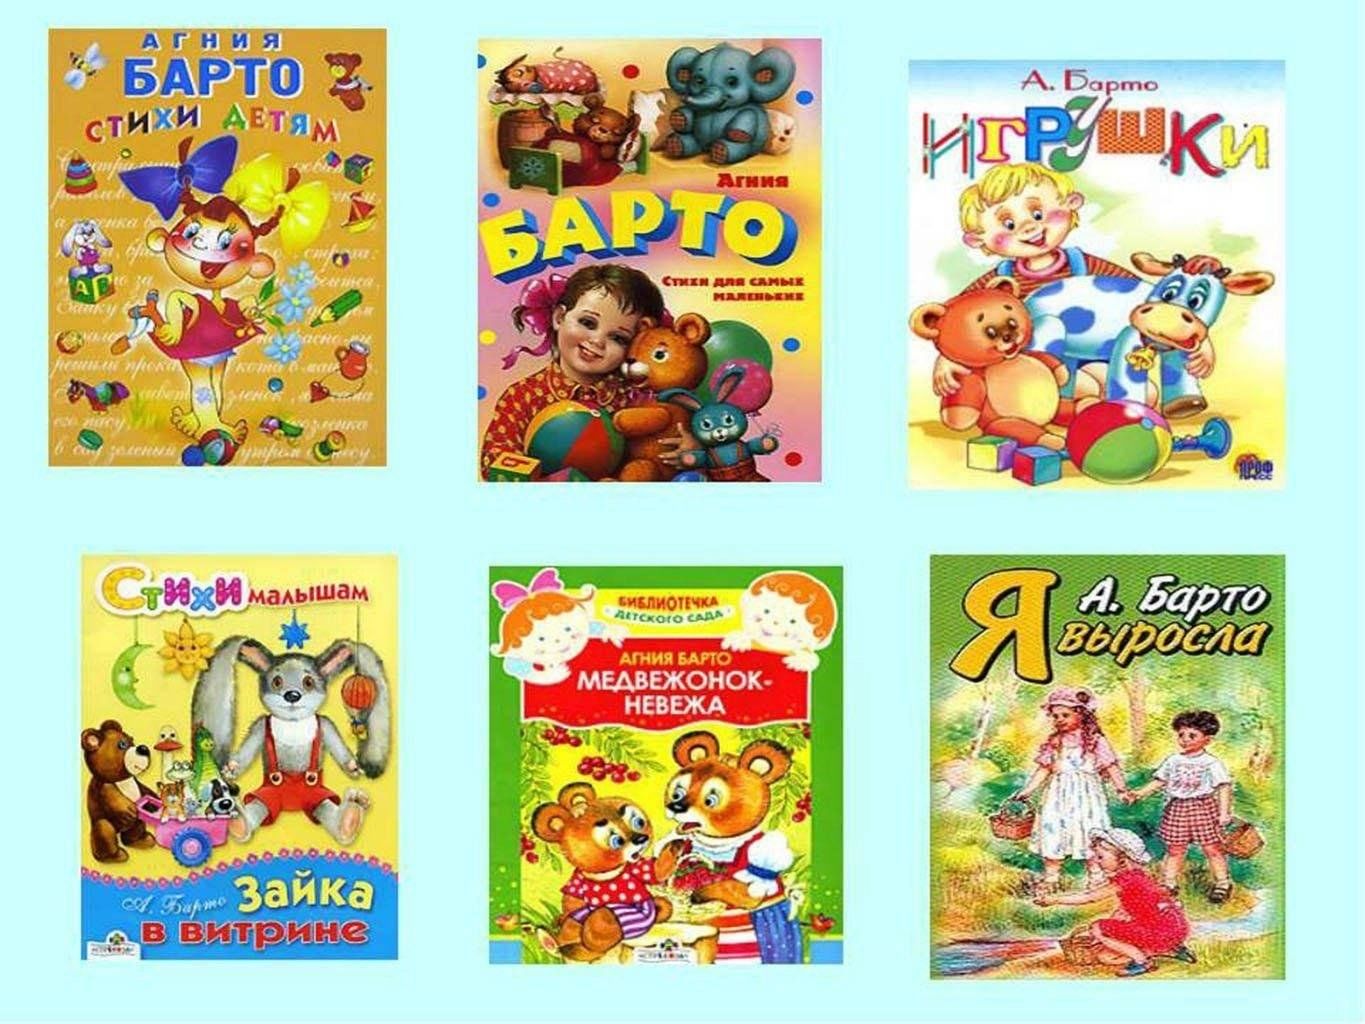 Вспомни какие произведения а барто. А Л Барто произведения для детей. Произведения Агнии Барто книги. Произведения Агнии Барто для детей список.